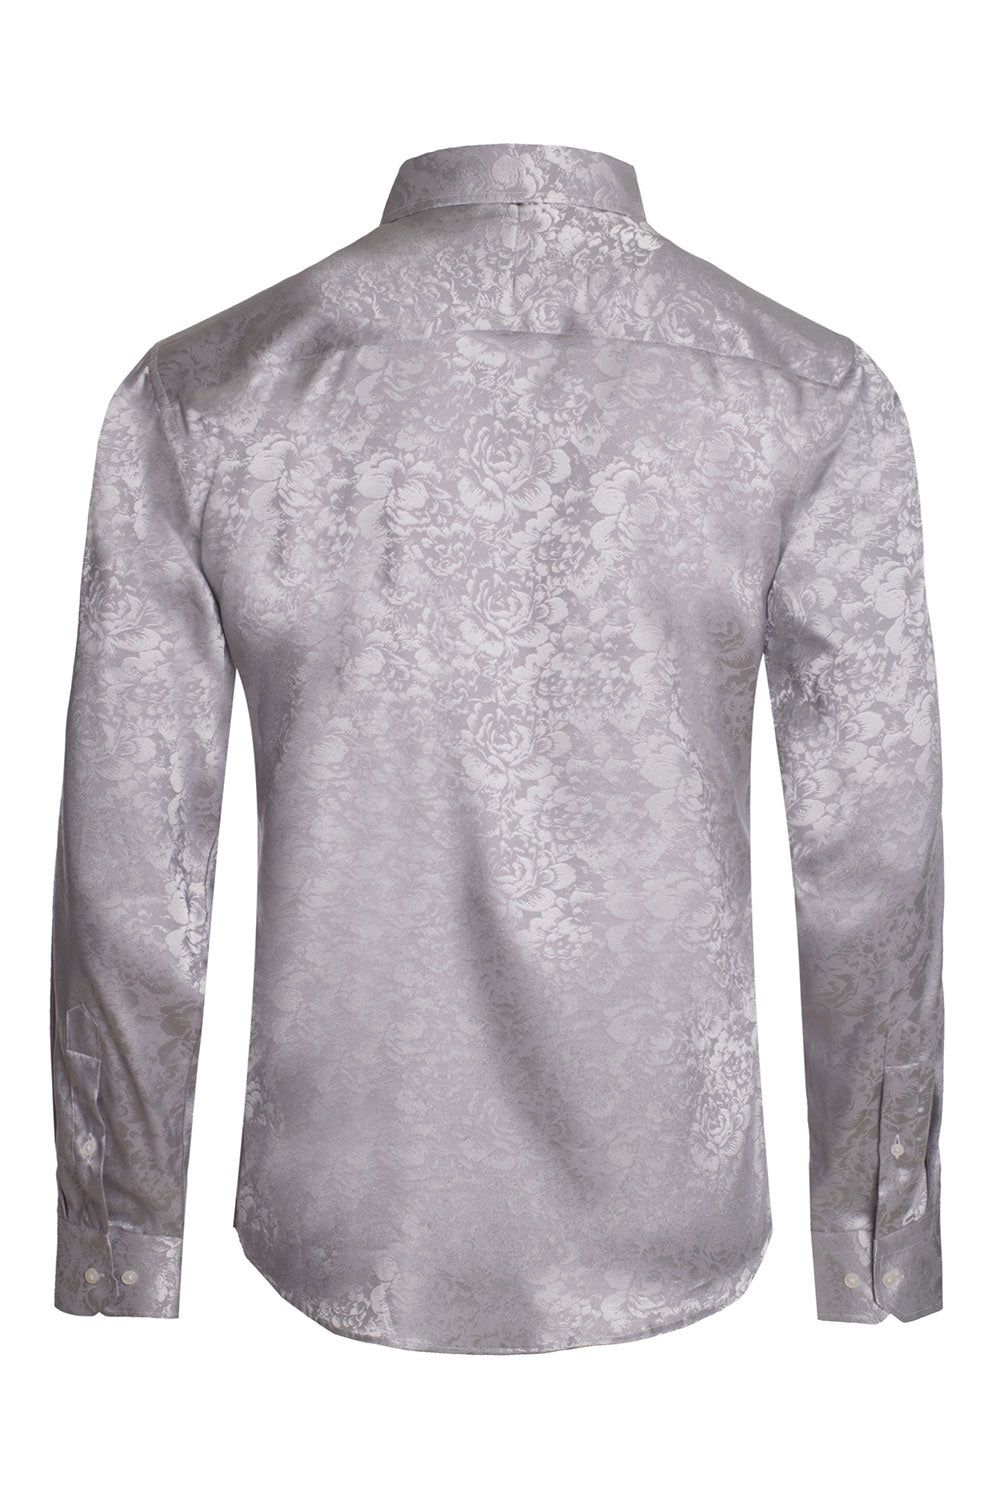 BARABAS Men textured floral button down Silver shirts B309